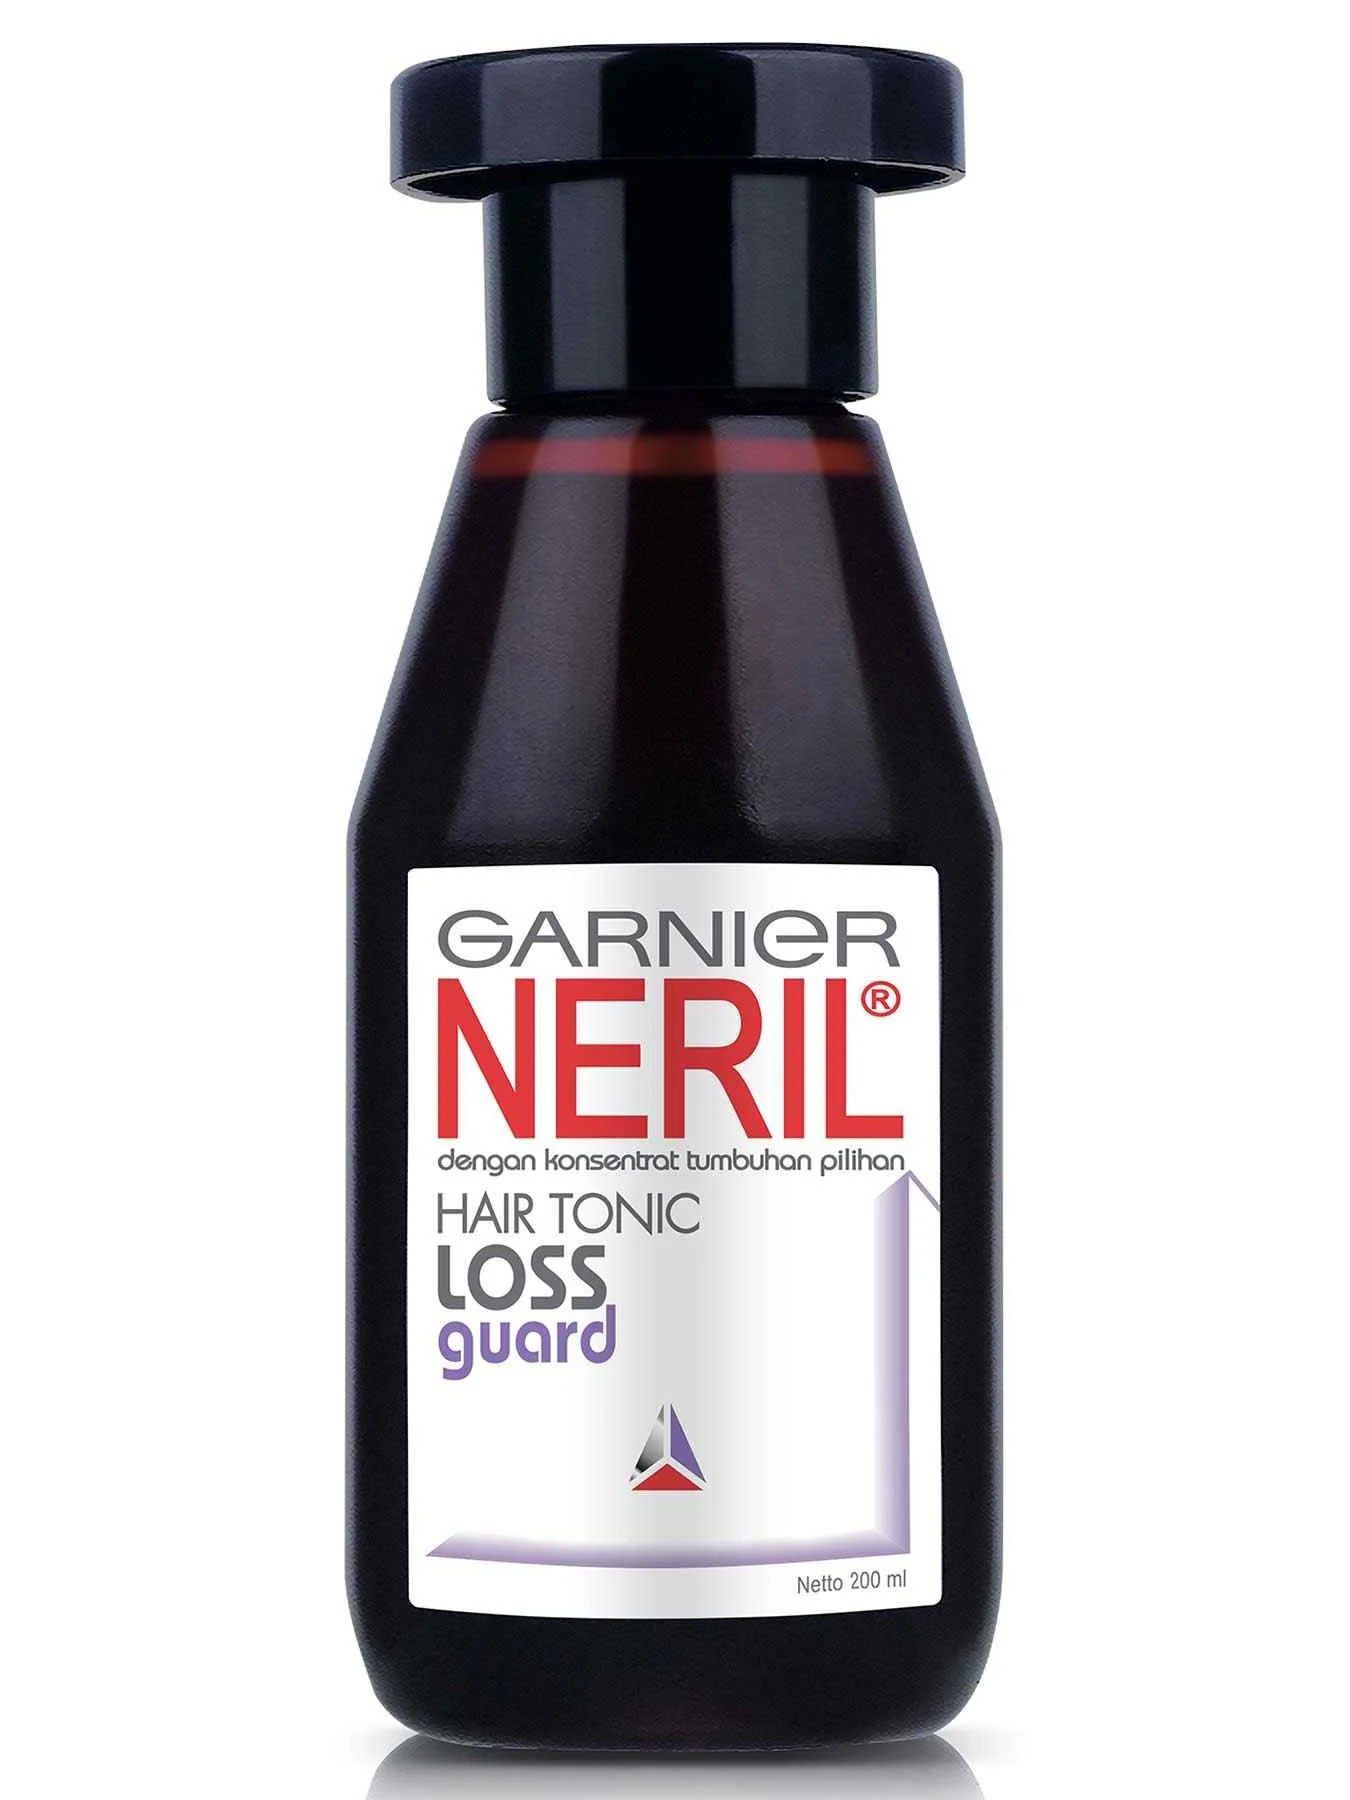 Rekomendasi Hair Tonic untuk Rambut Rontok - Garnier Neril Anti Loss Guard Hair Tonic